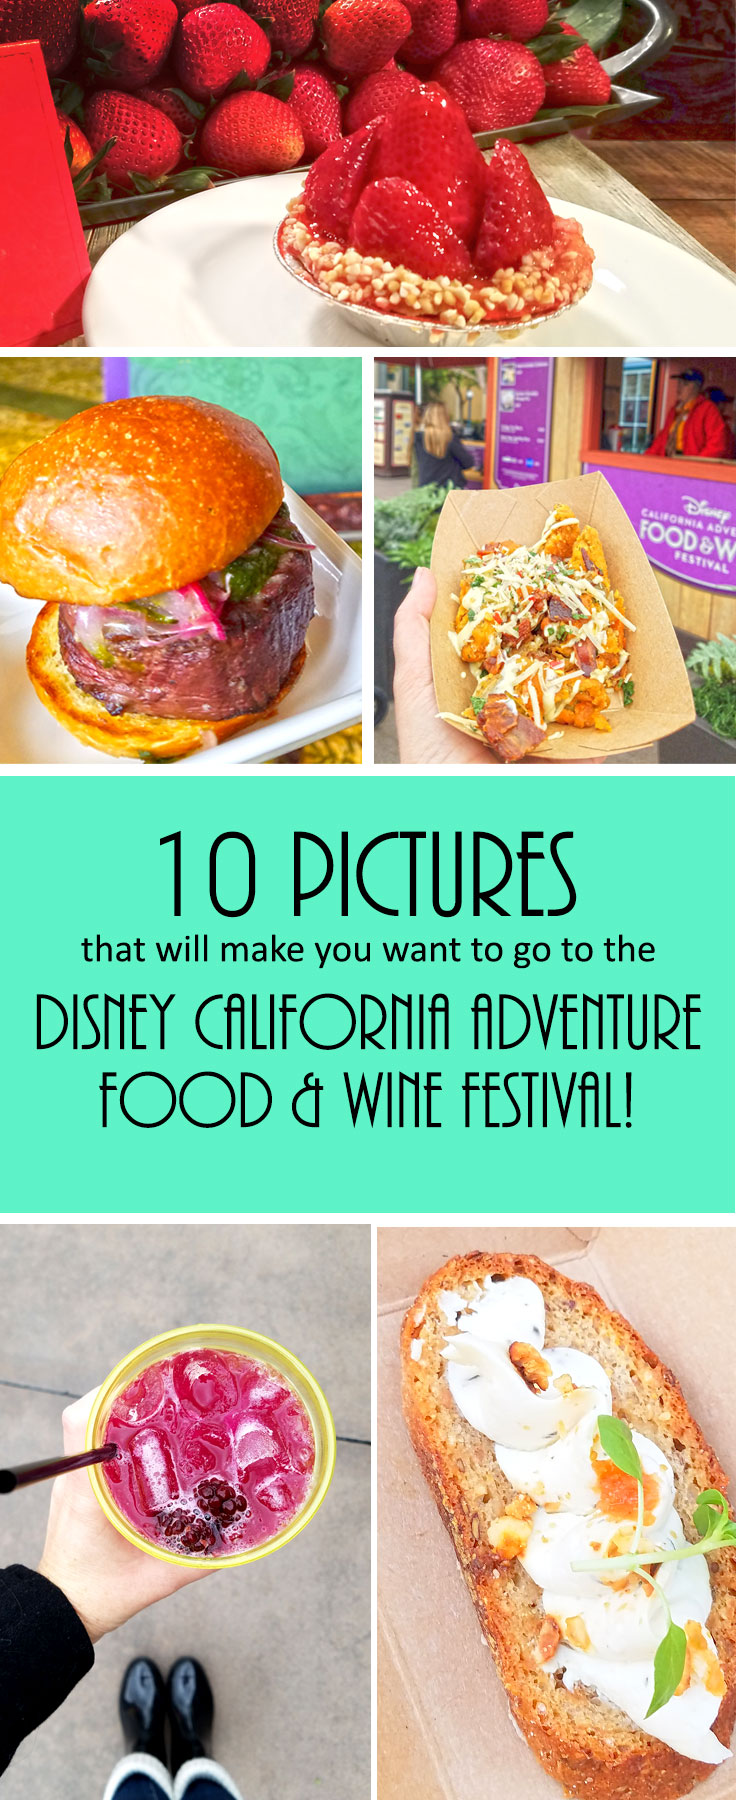 Disney California Adventure Food and Wine Festival